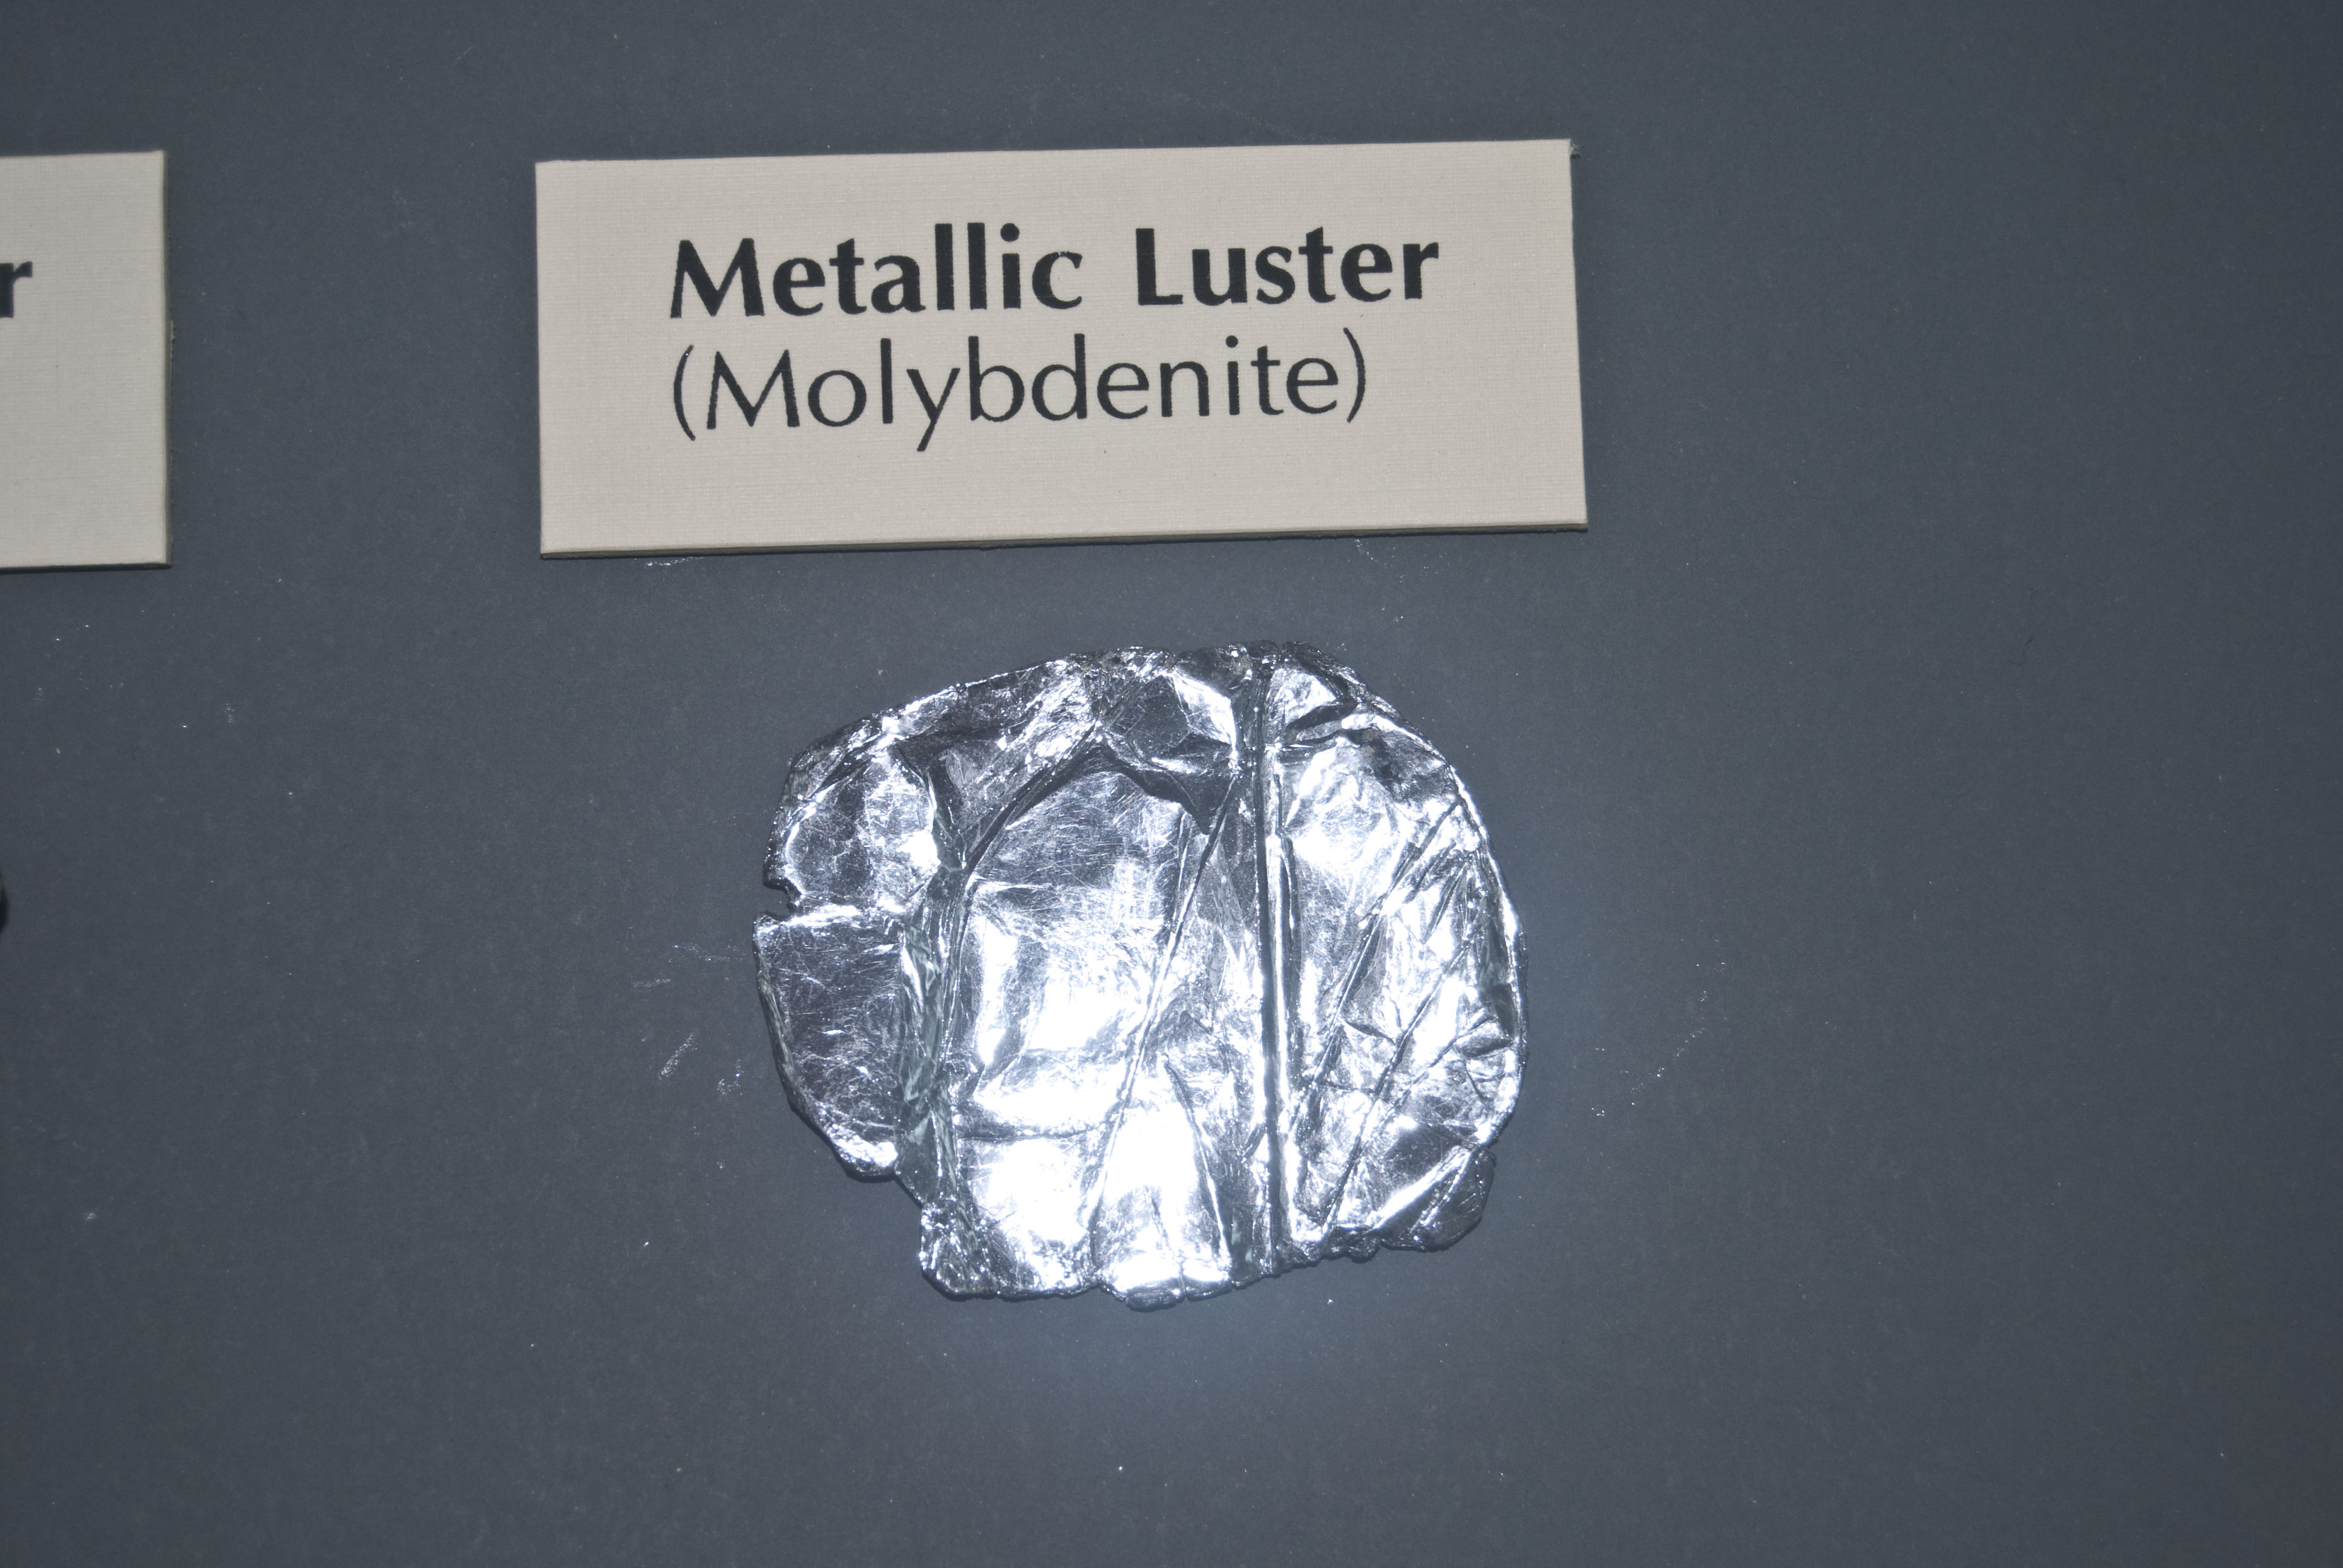 File:Molybdenite Metallic luster.jpg - Wikimedia Commons